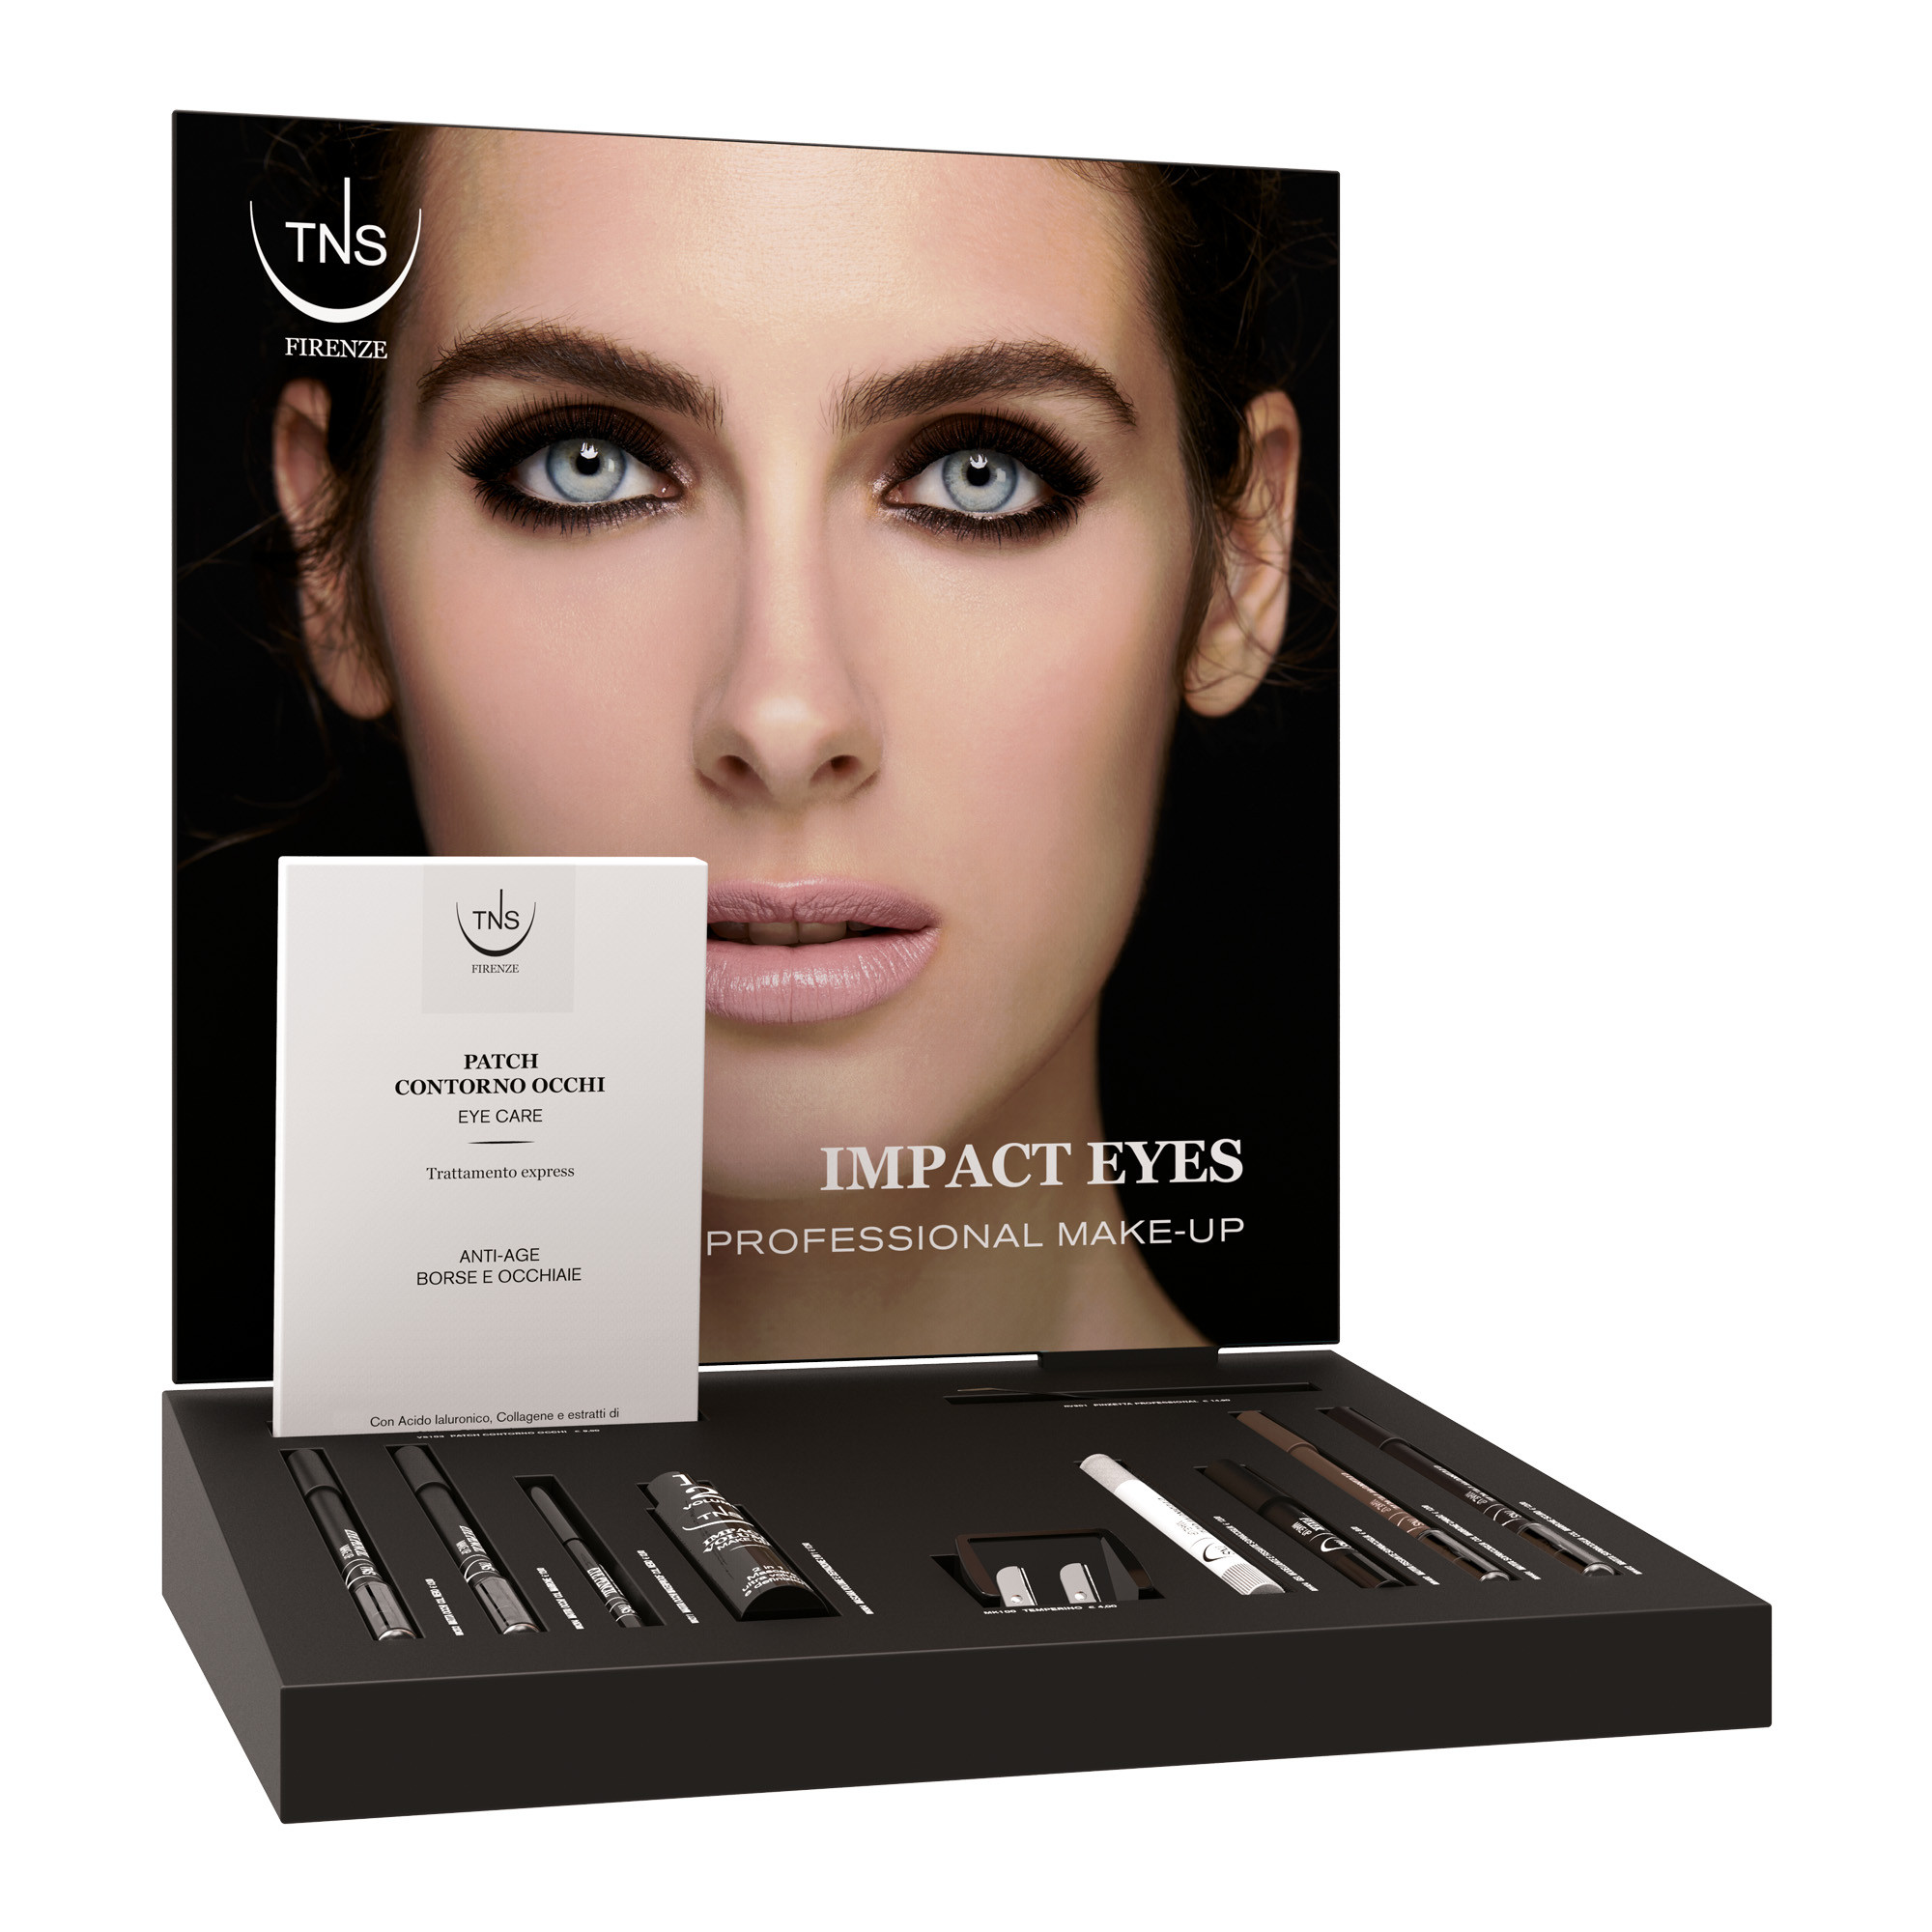 Impact Eyes Augen-Make-up-Display mit Tester-Produkten